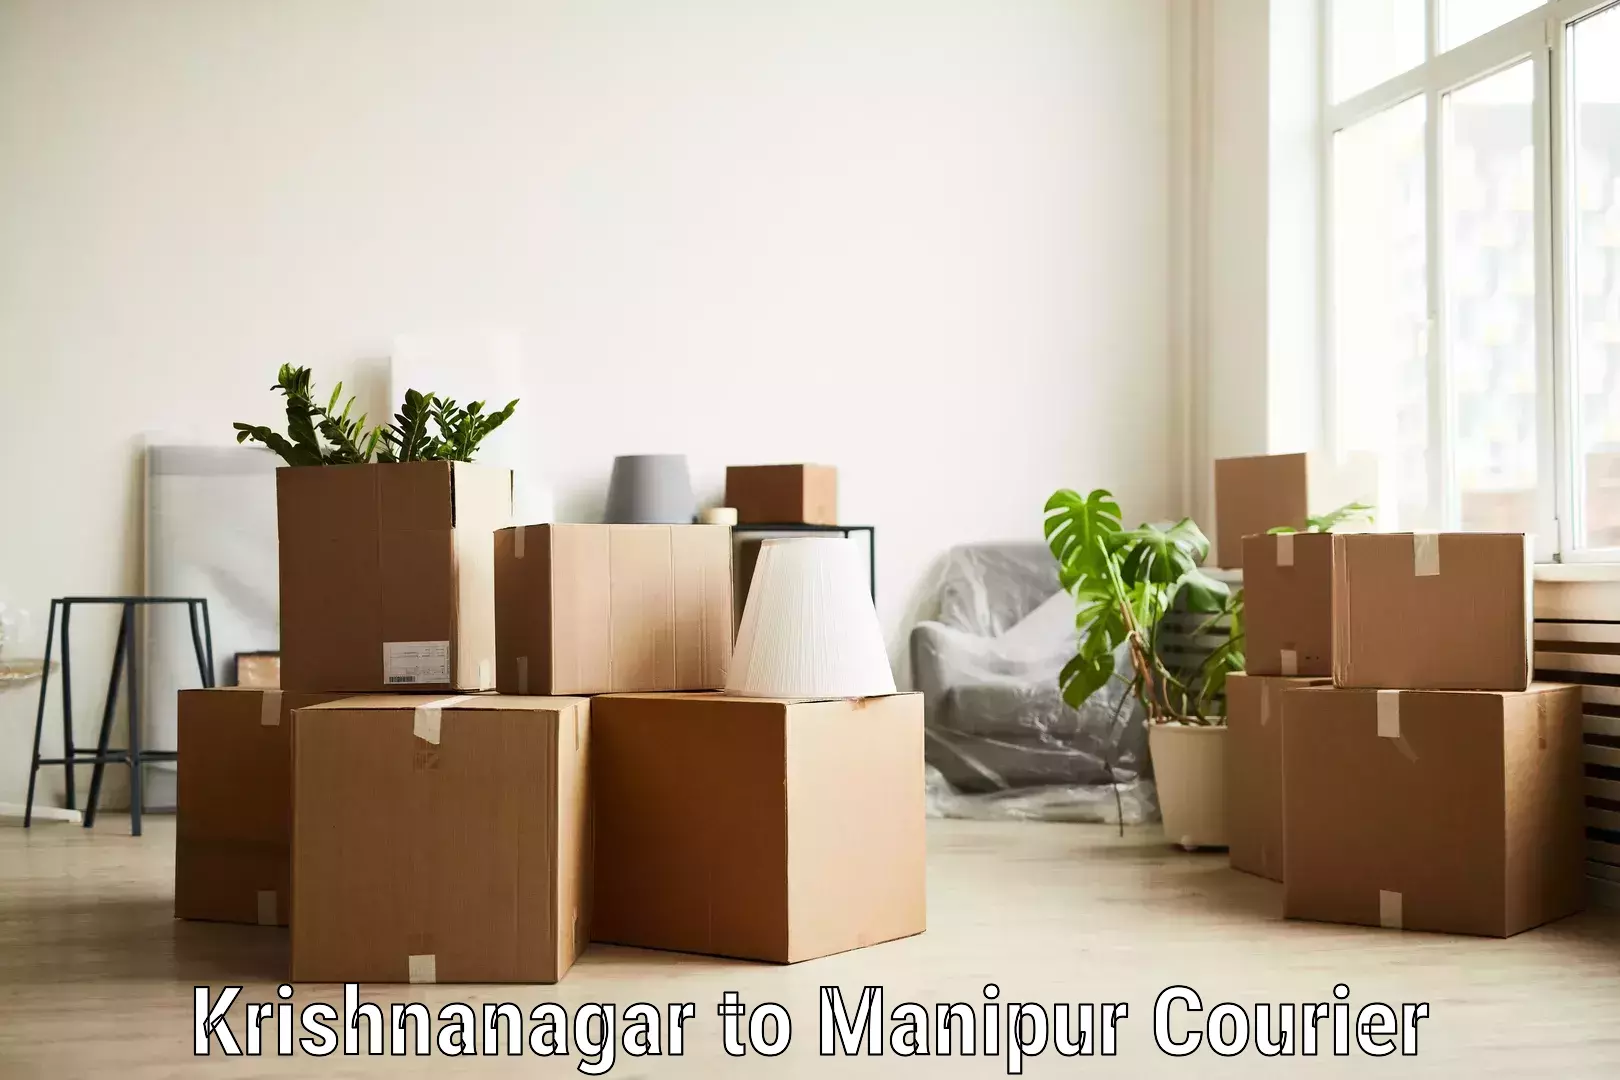 Nationwide delivery network Krishnanagar to Manipur